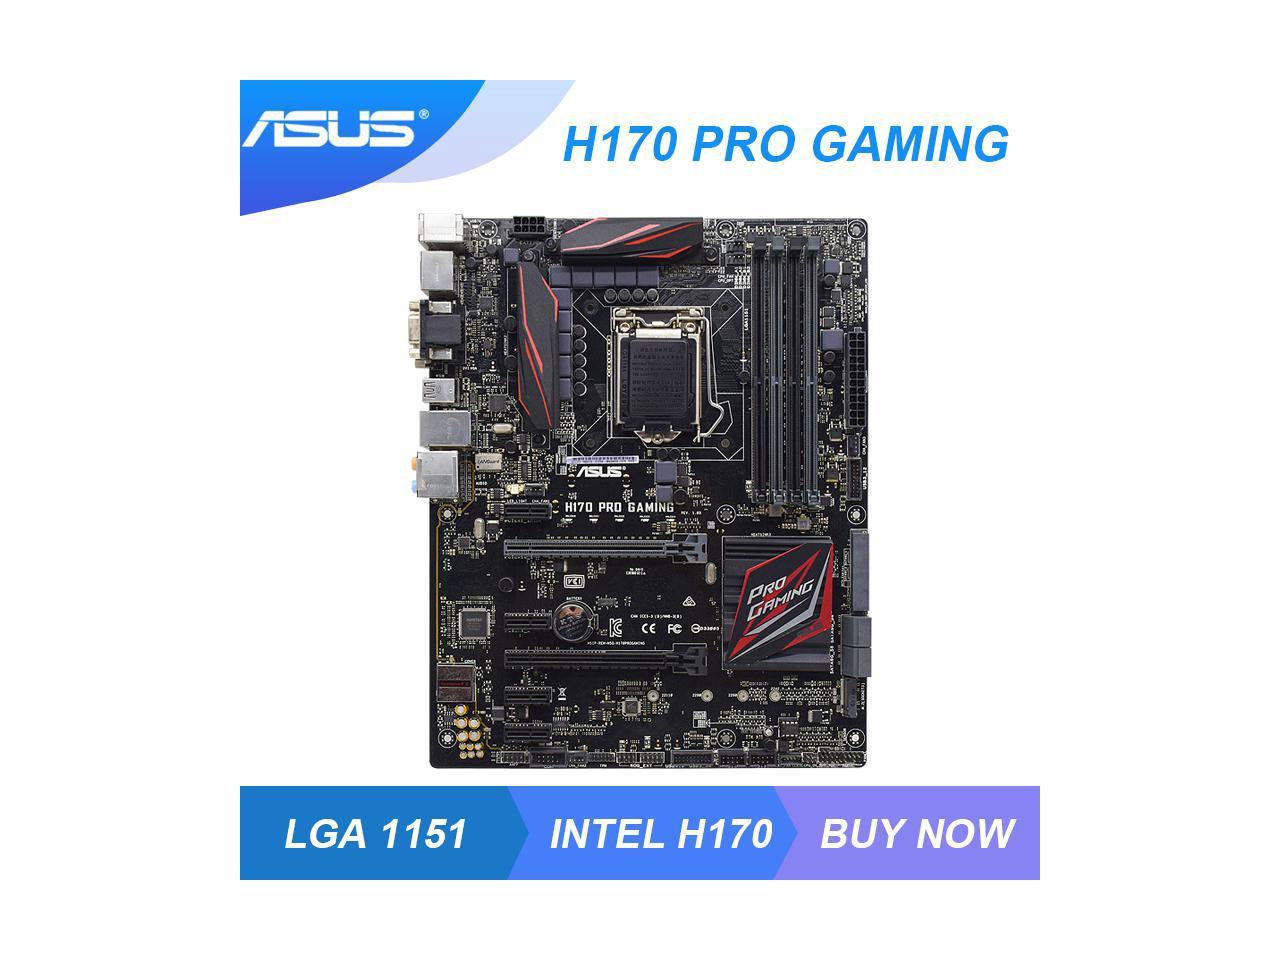 ASUS H170 PRO GAMING LGA 1151 Intel H170 Gaming PC Motherboard 